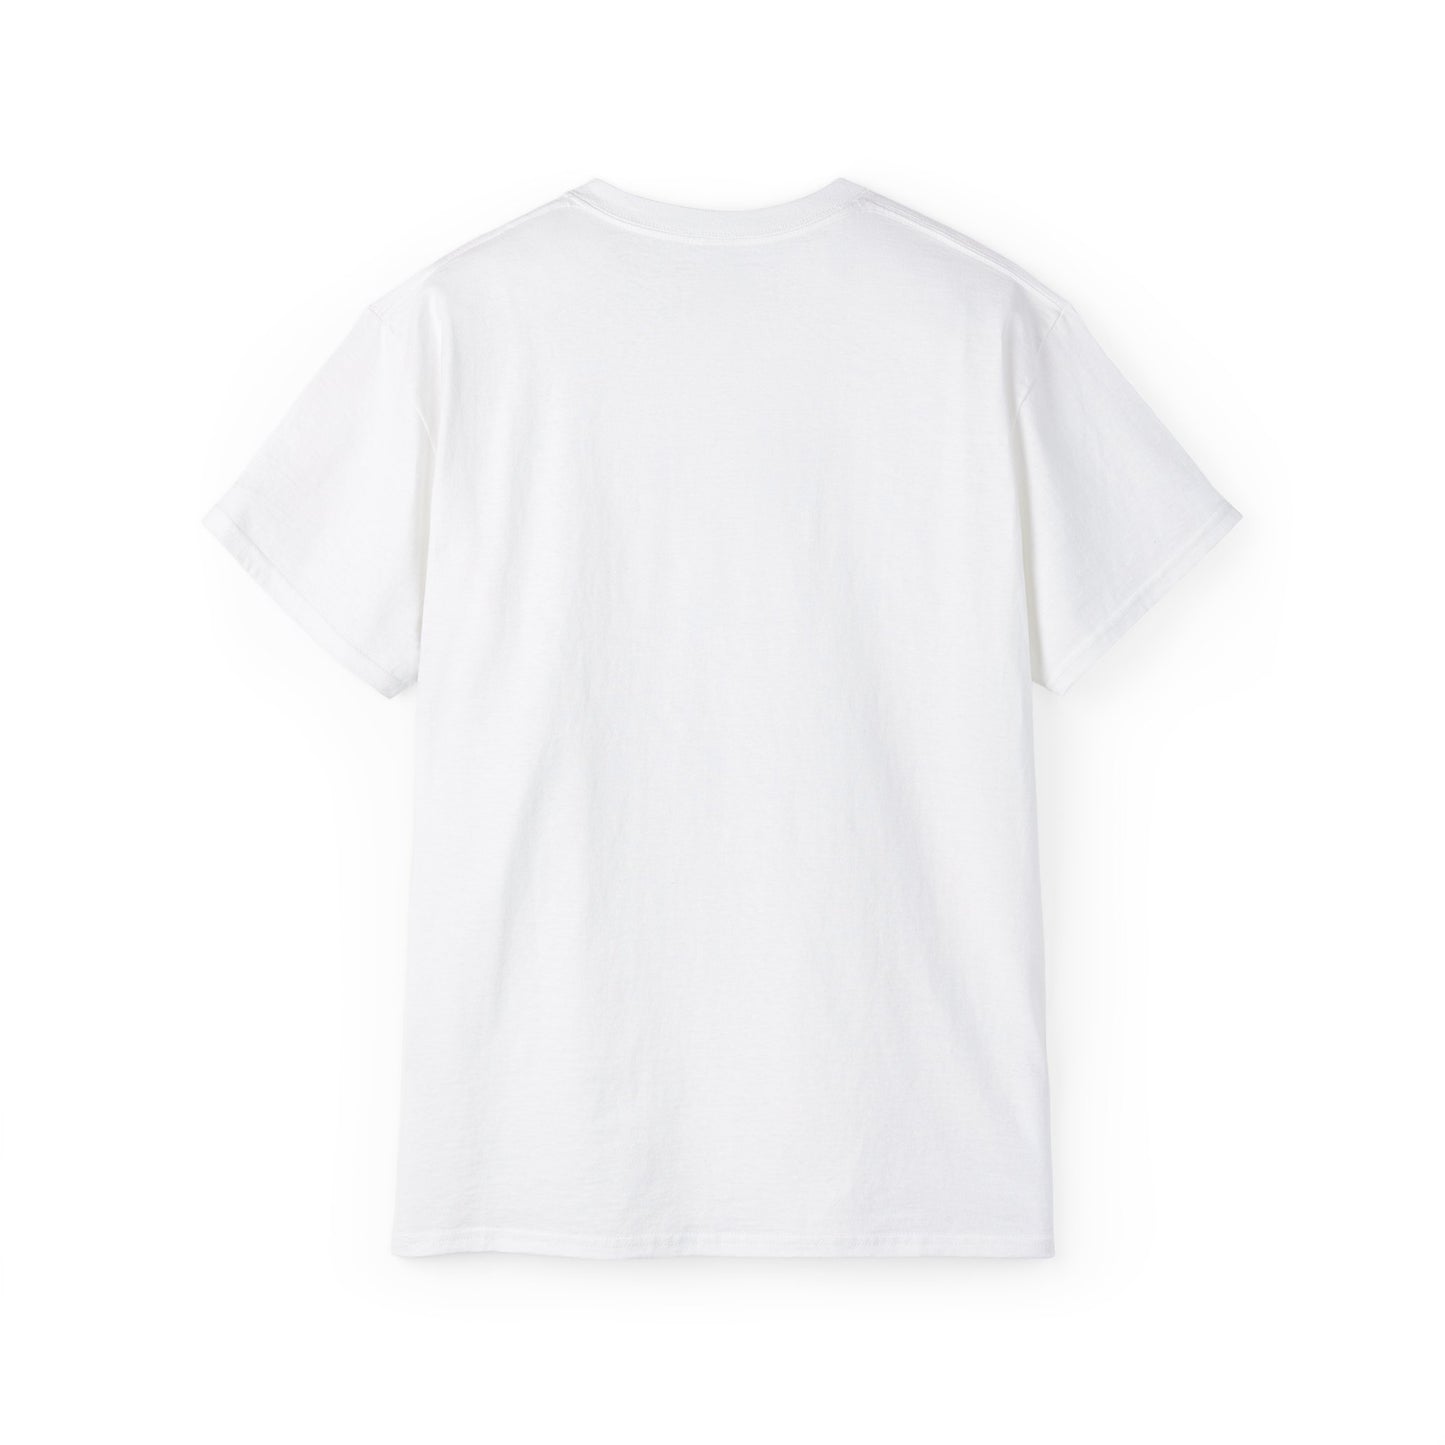 Envy - Unisex T-Shirt